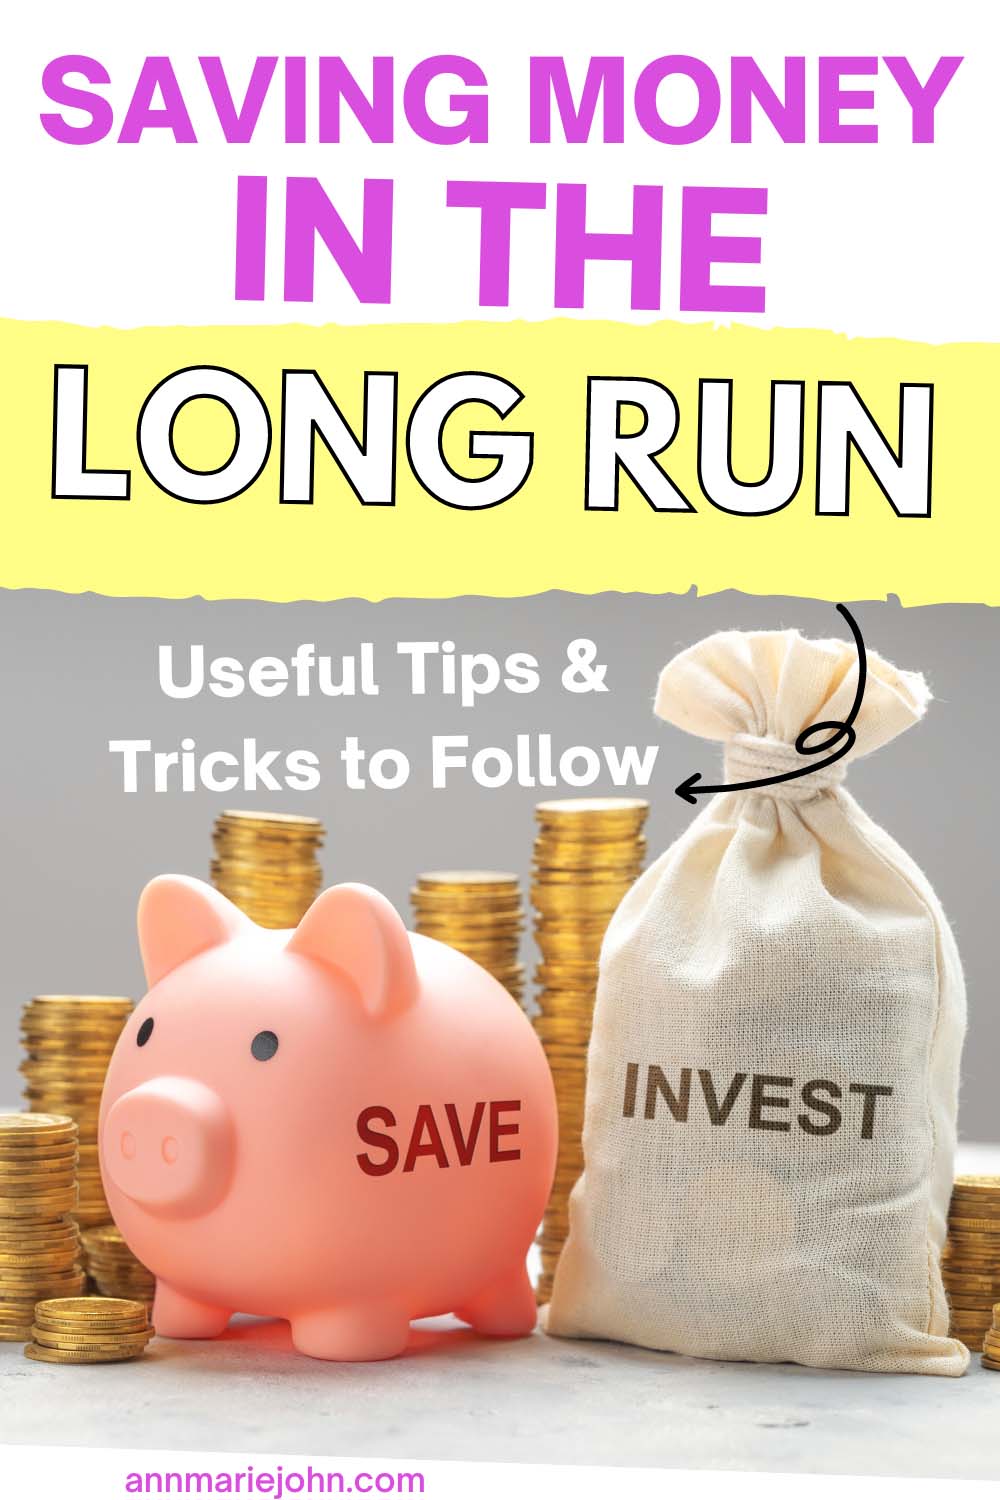 Saving Money in the Long-Run: Useful Tips & Tricks to Follow